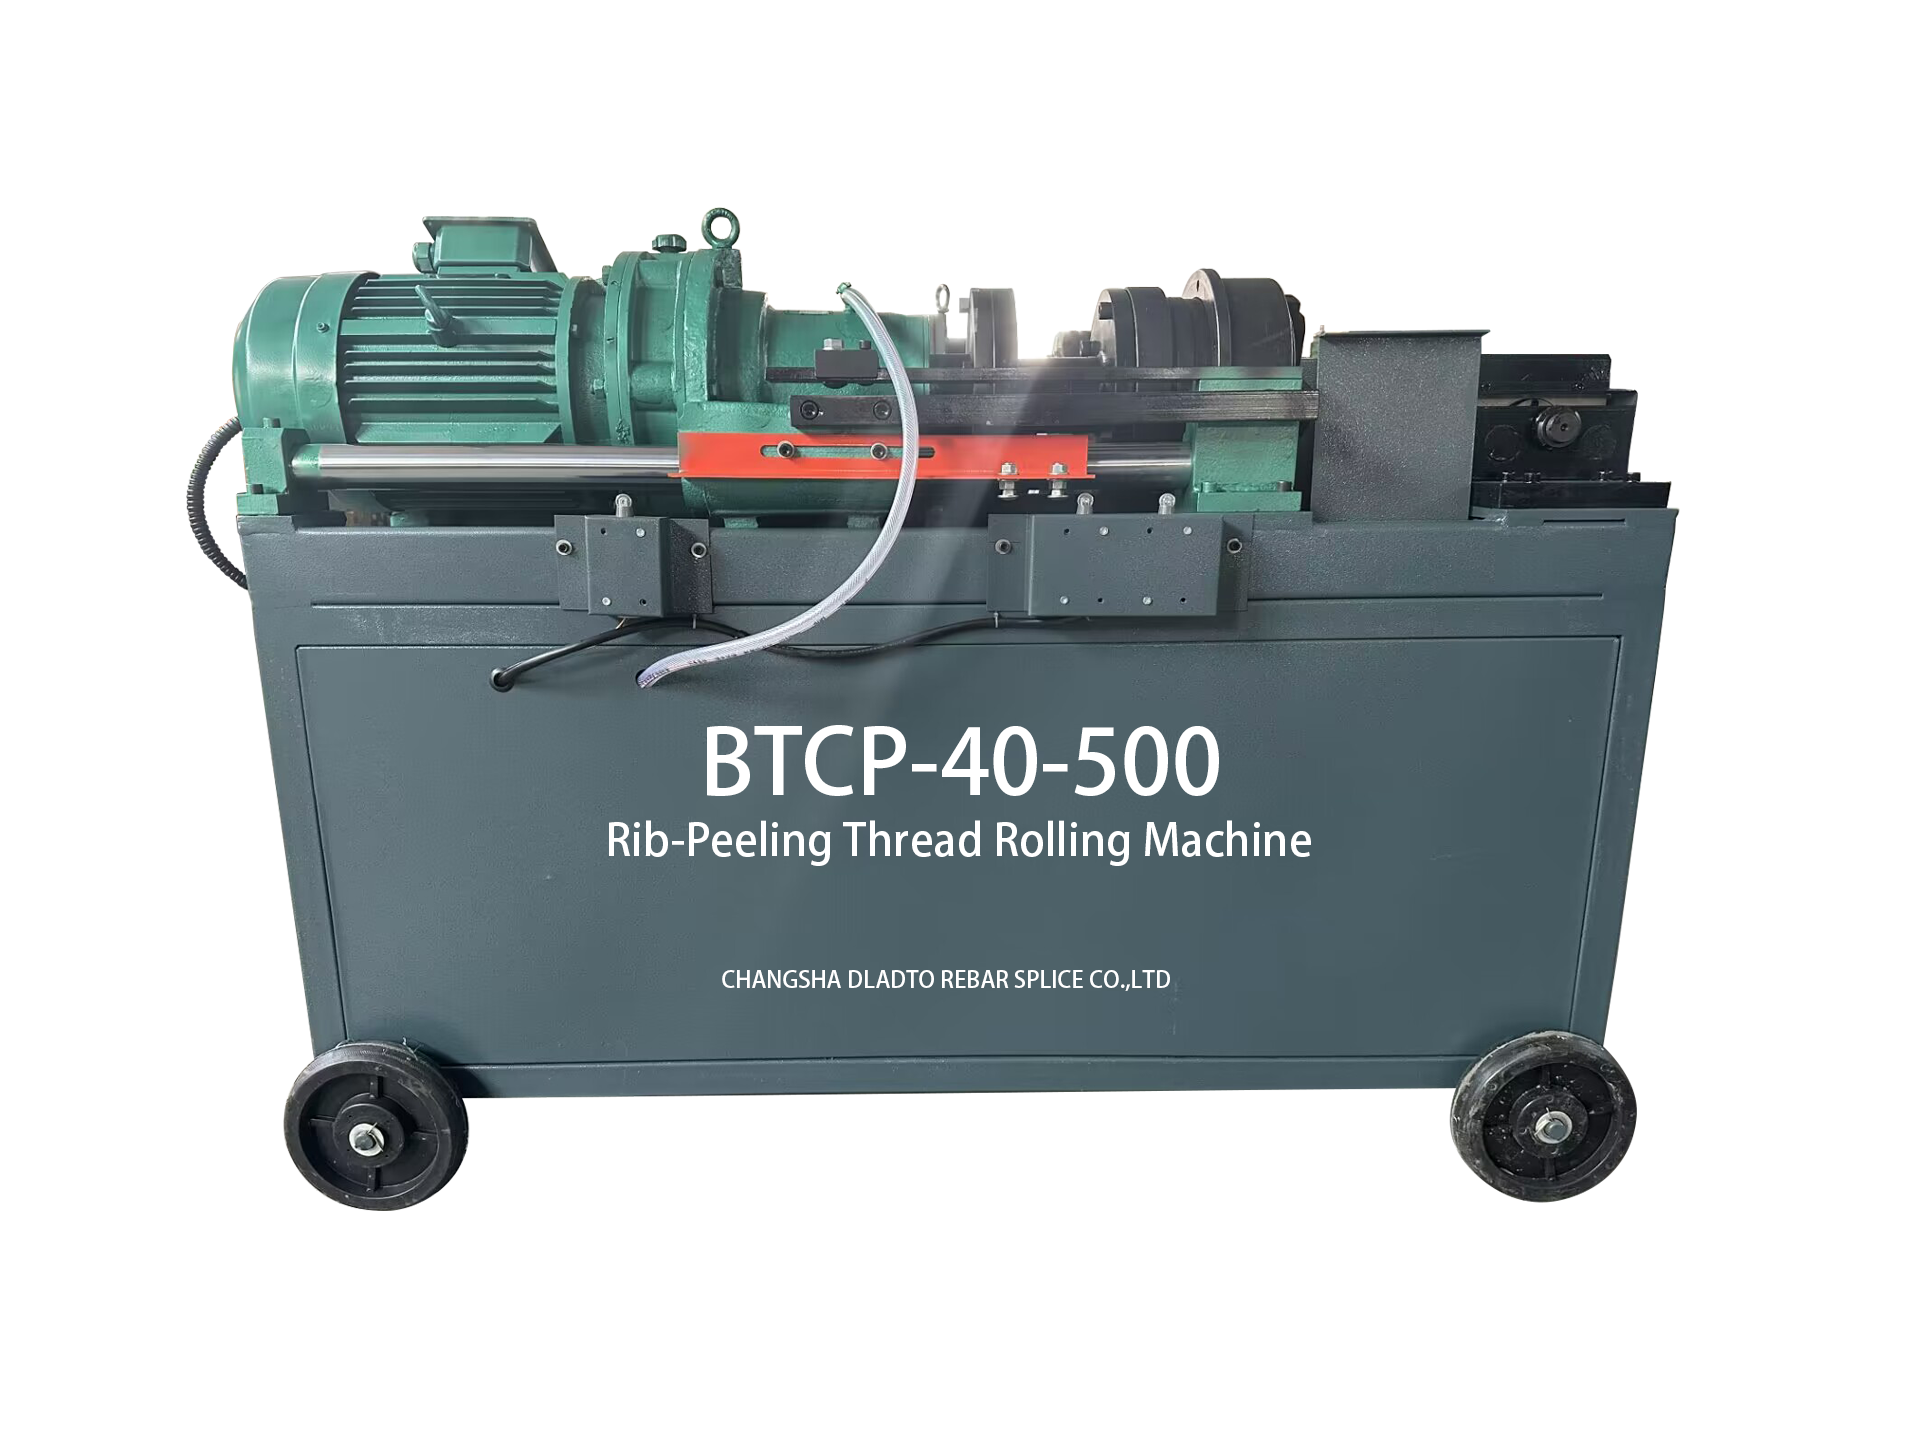 Rebar Rib -peeling And Threading Roller Machine BTCP-40-500